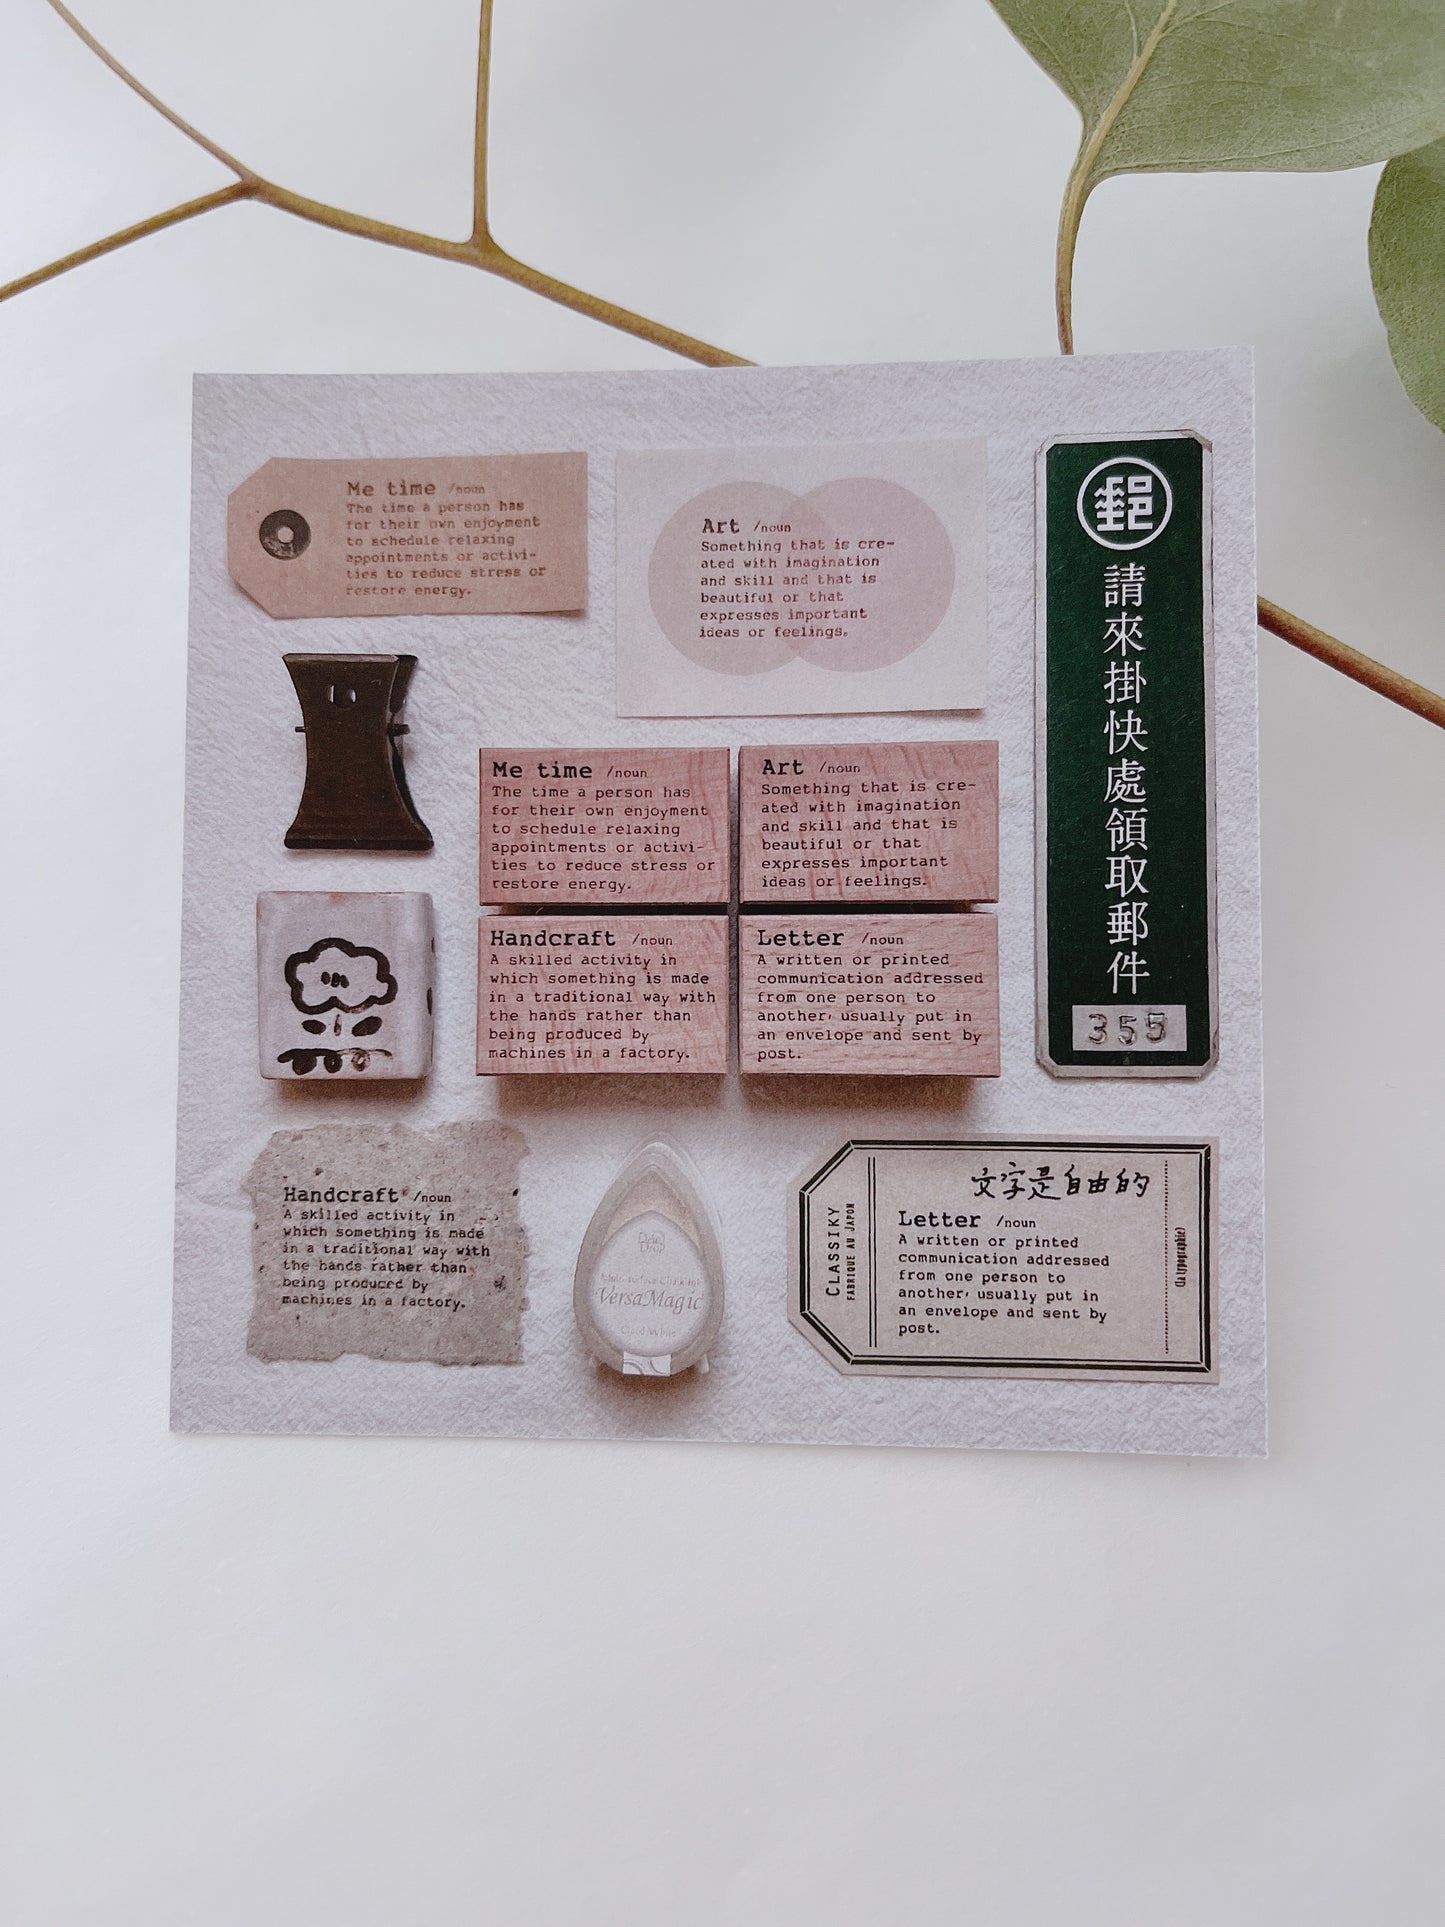 Liberty.hk Rubber Stamp Set | Art, Handcraft, Letter, Me Time